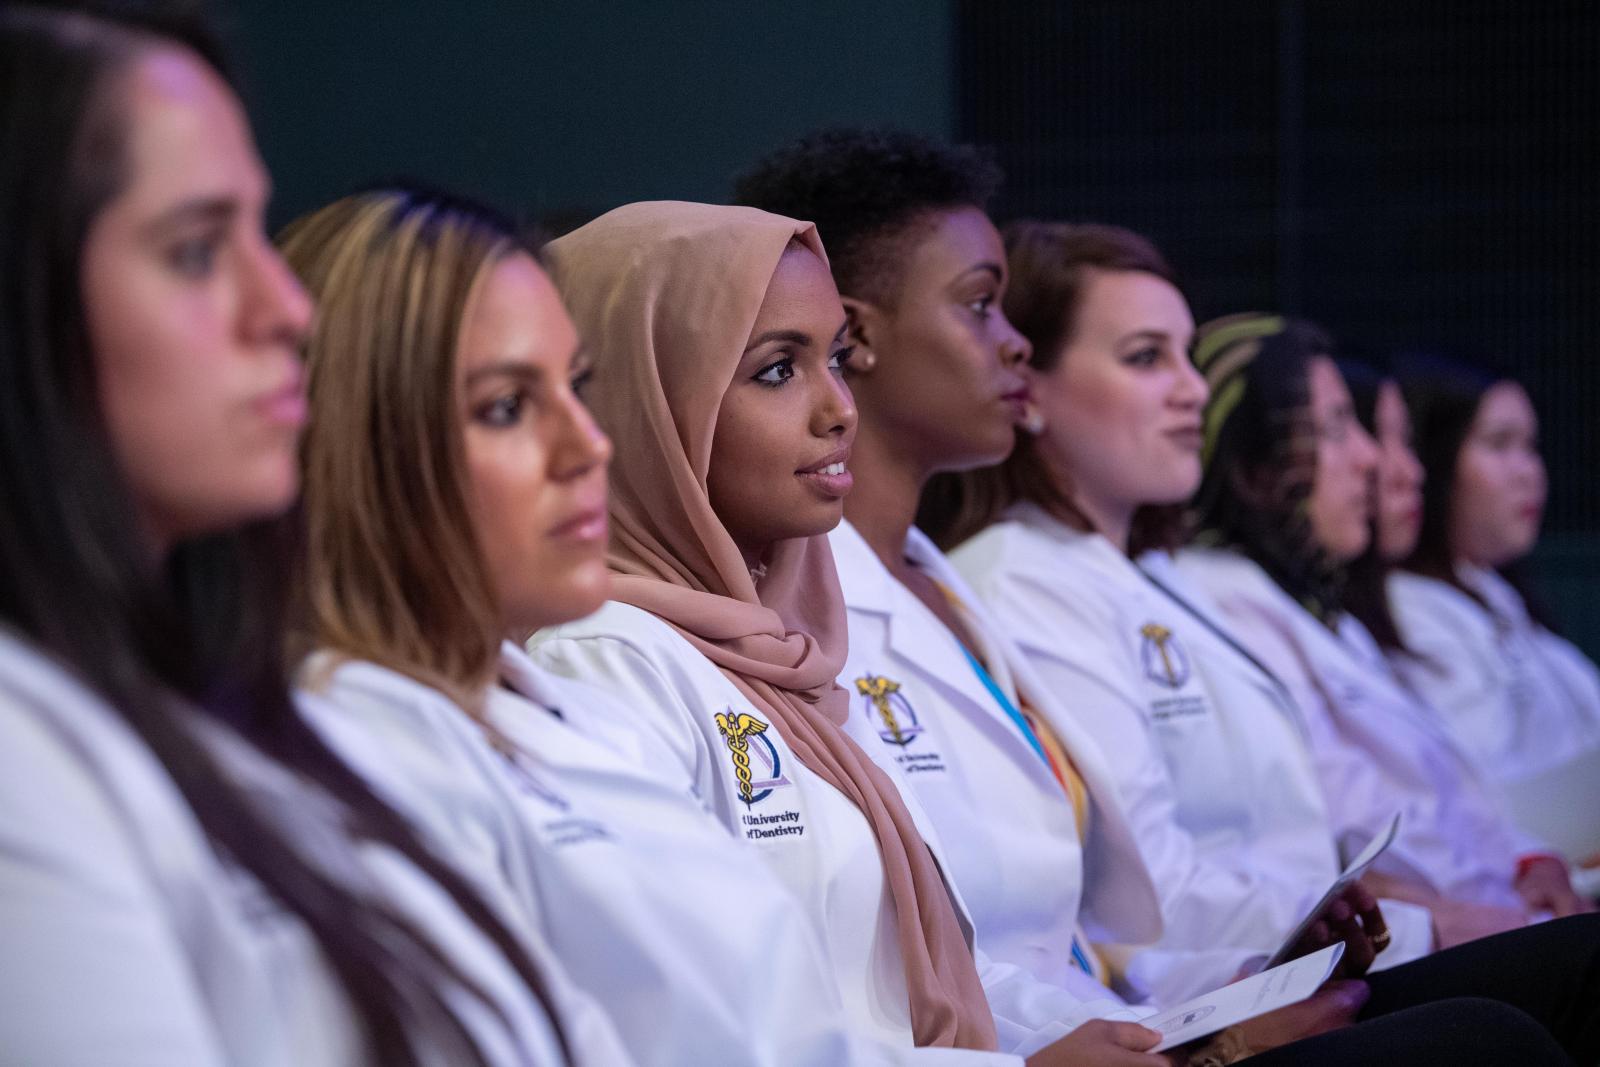 women dental students in white coats sitting